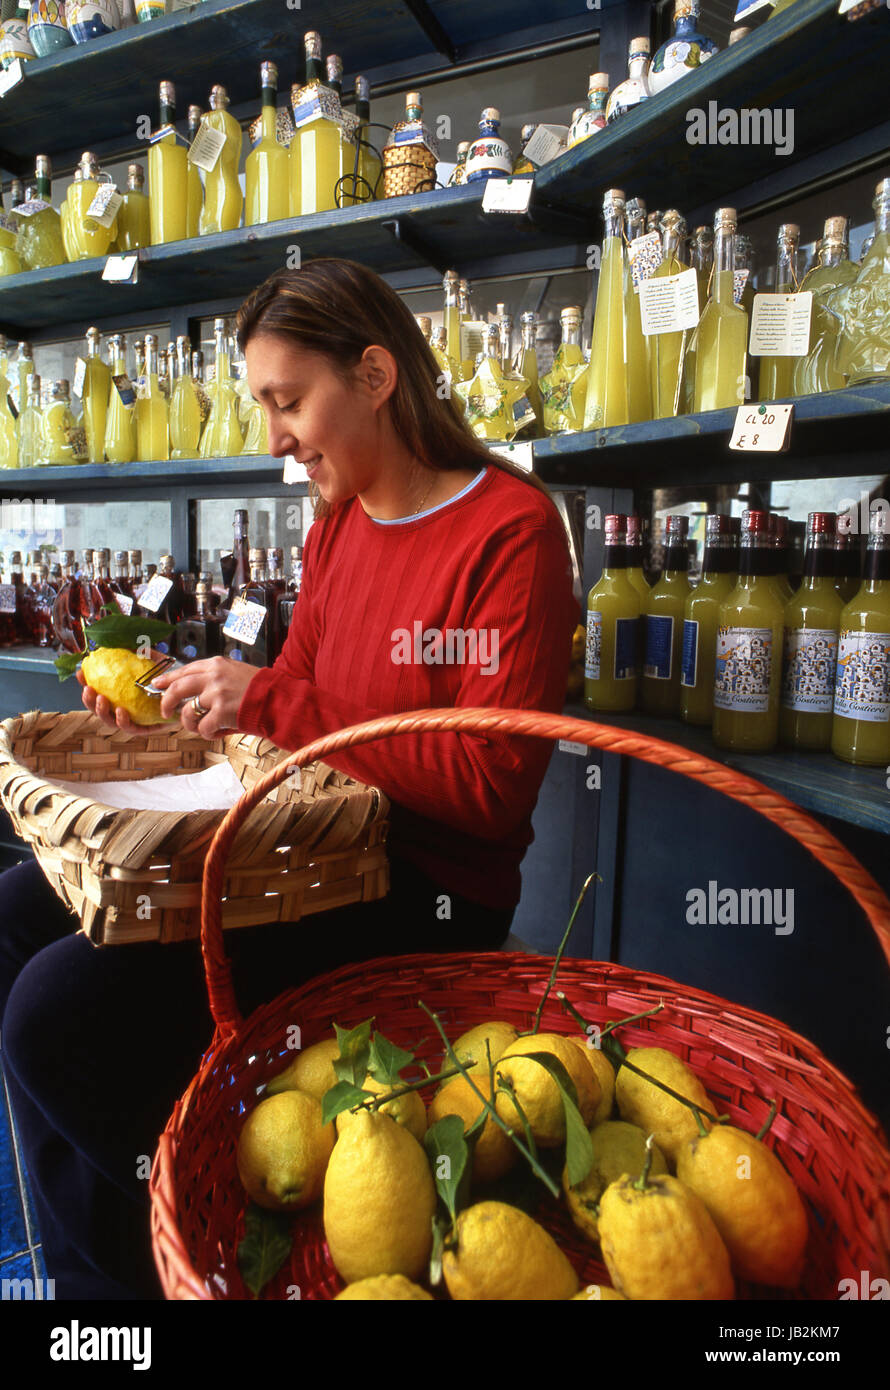 Limoncello, Amalfi lemons with girl peeling the skins to produce aromatic  Liquore al Limone, in Profumi della Costiera, Ravello, Campania, Italy. Stock Photo